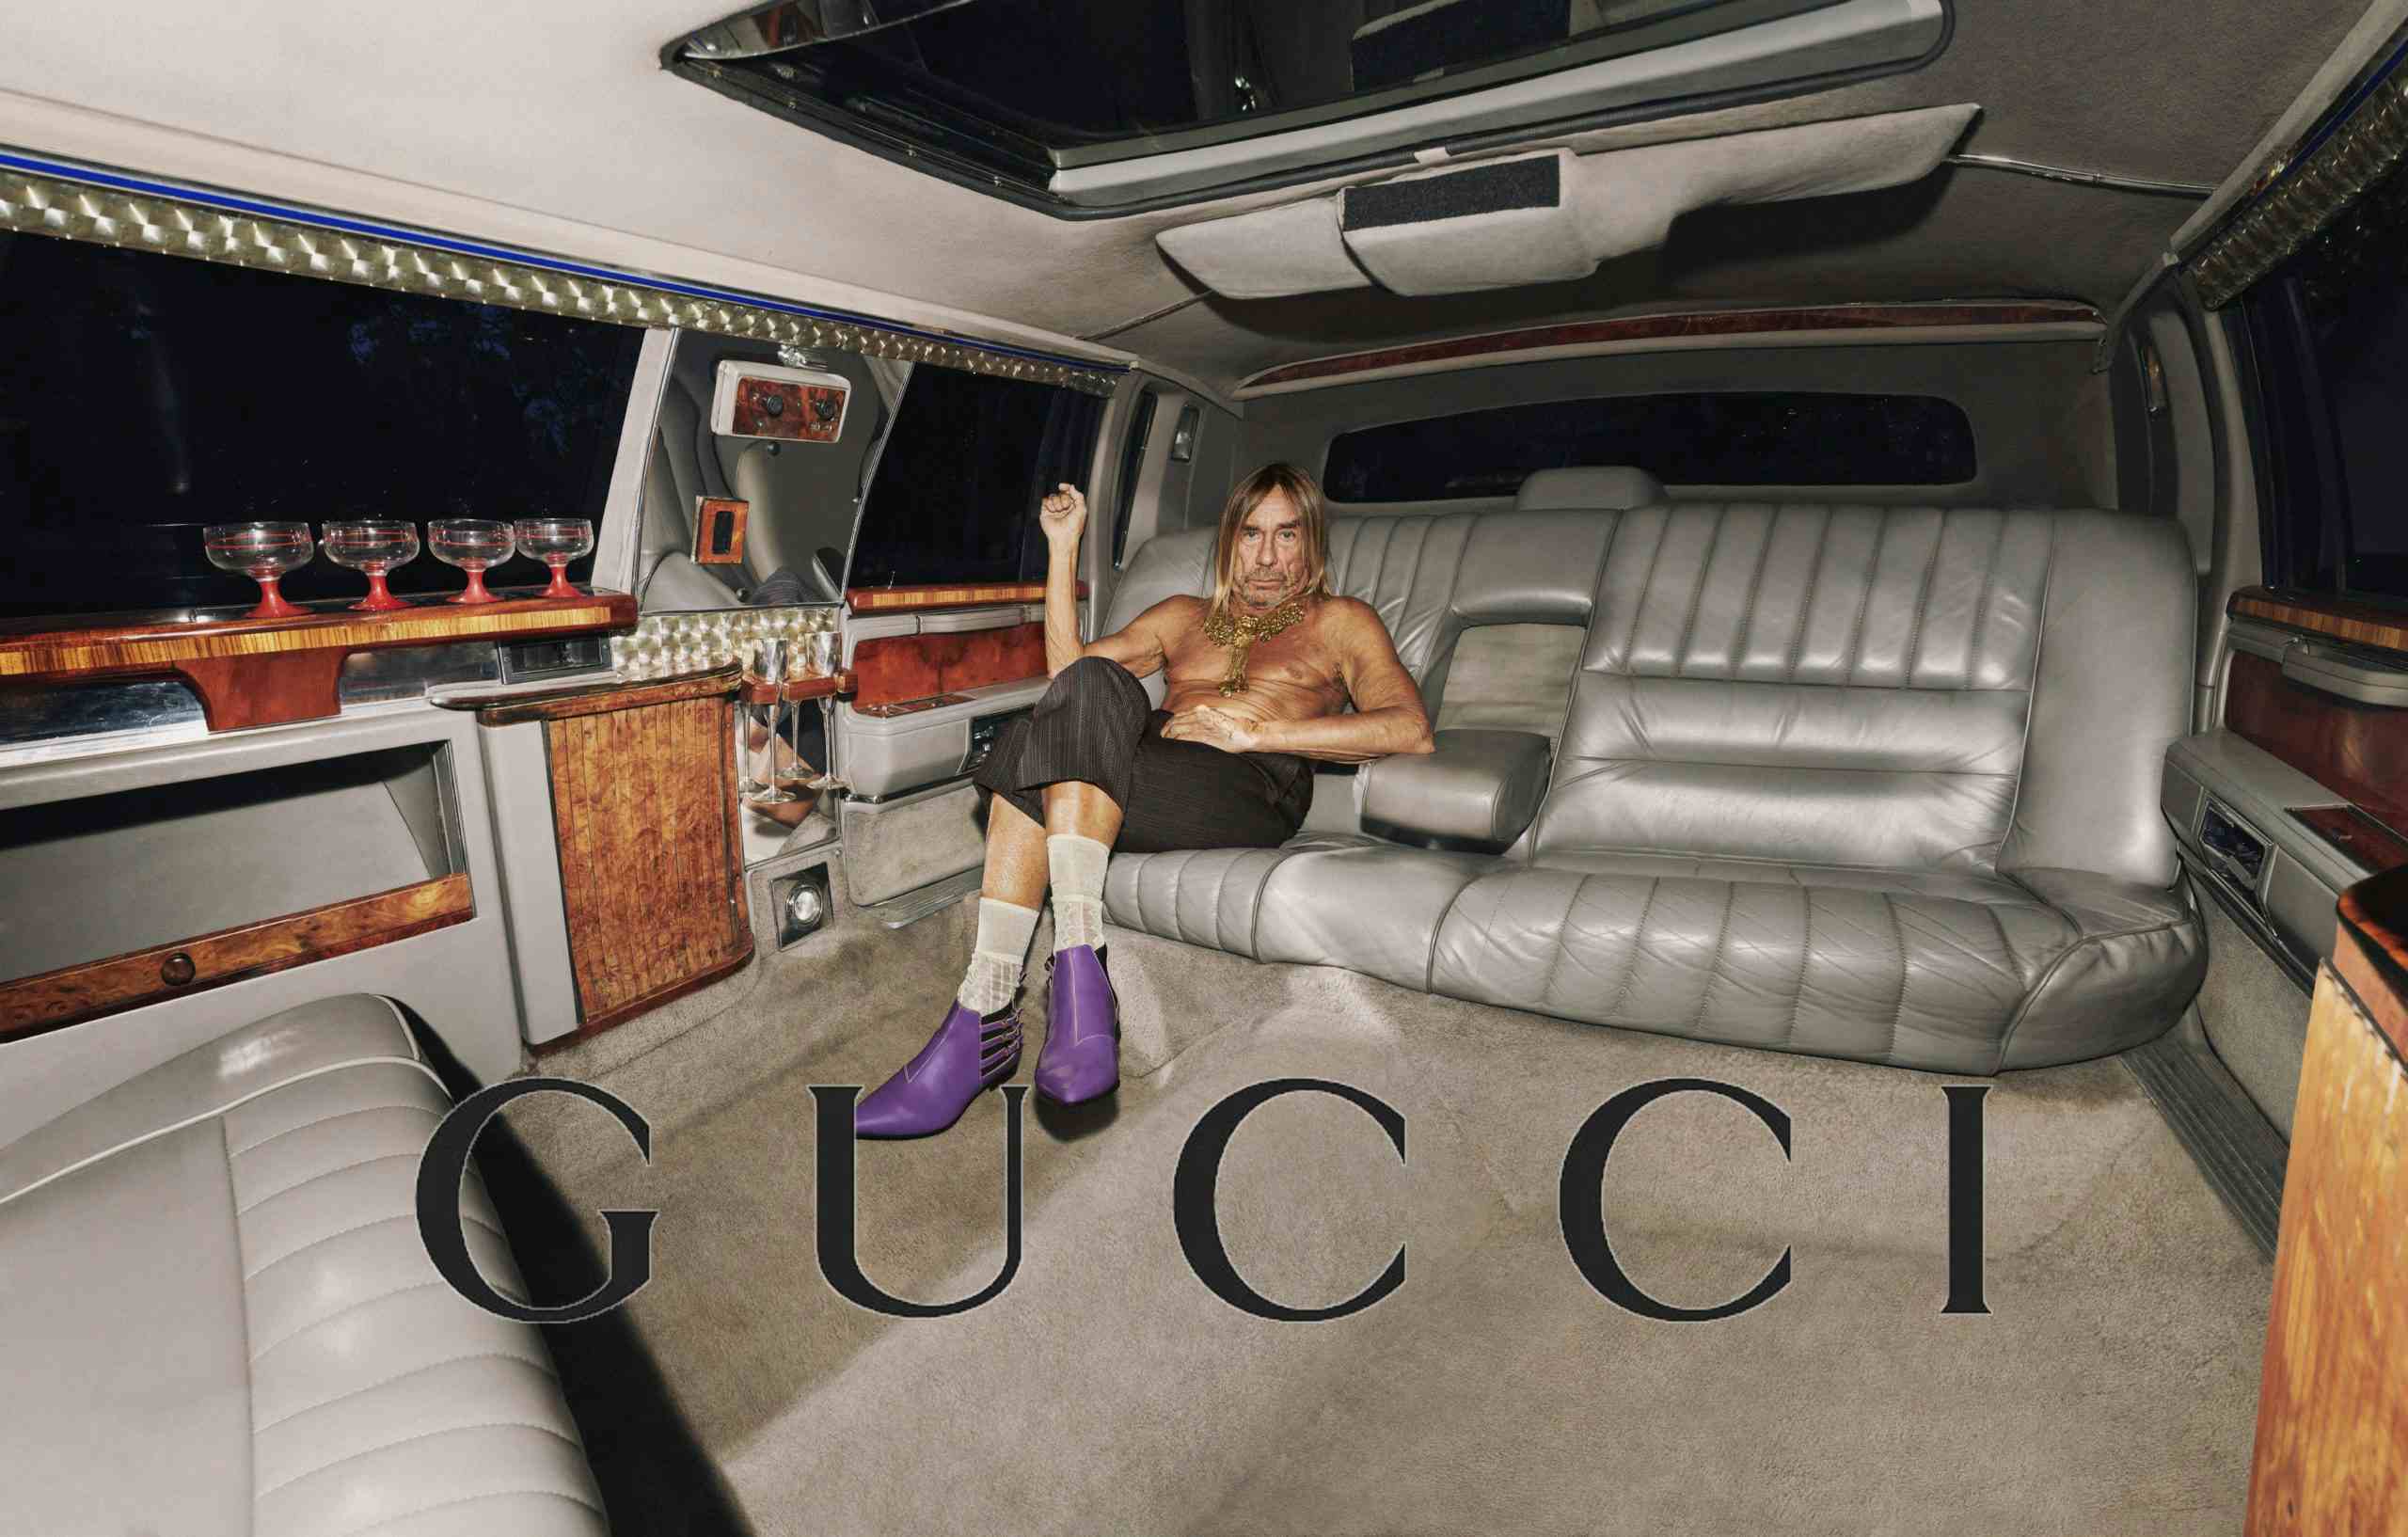 GUCCI - Gucci Cruise 2020
Photographer: Harmony Korine
Location: Rome